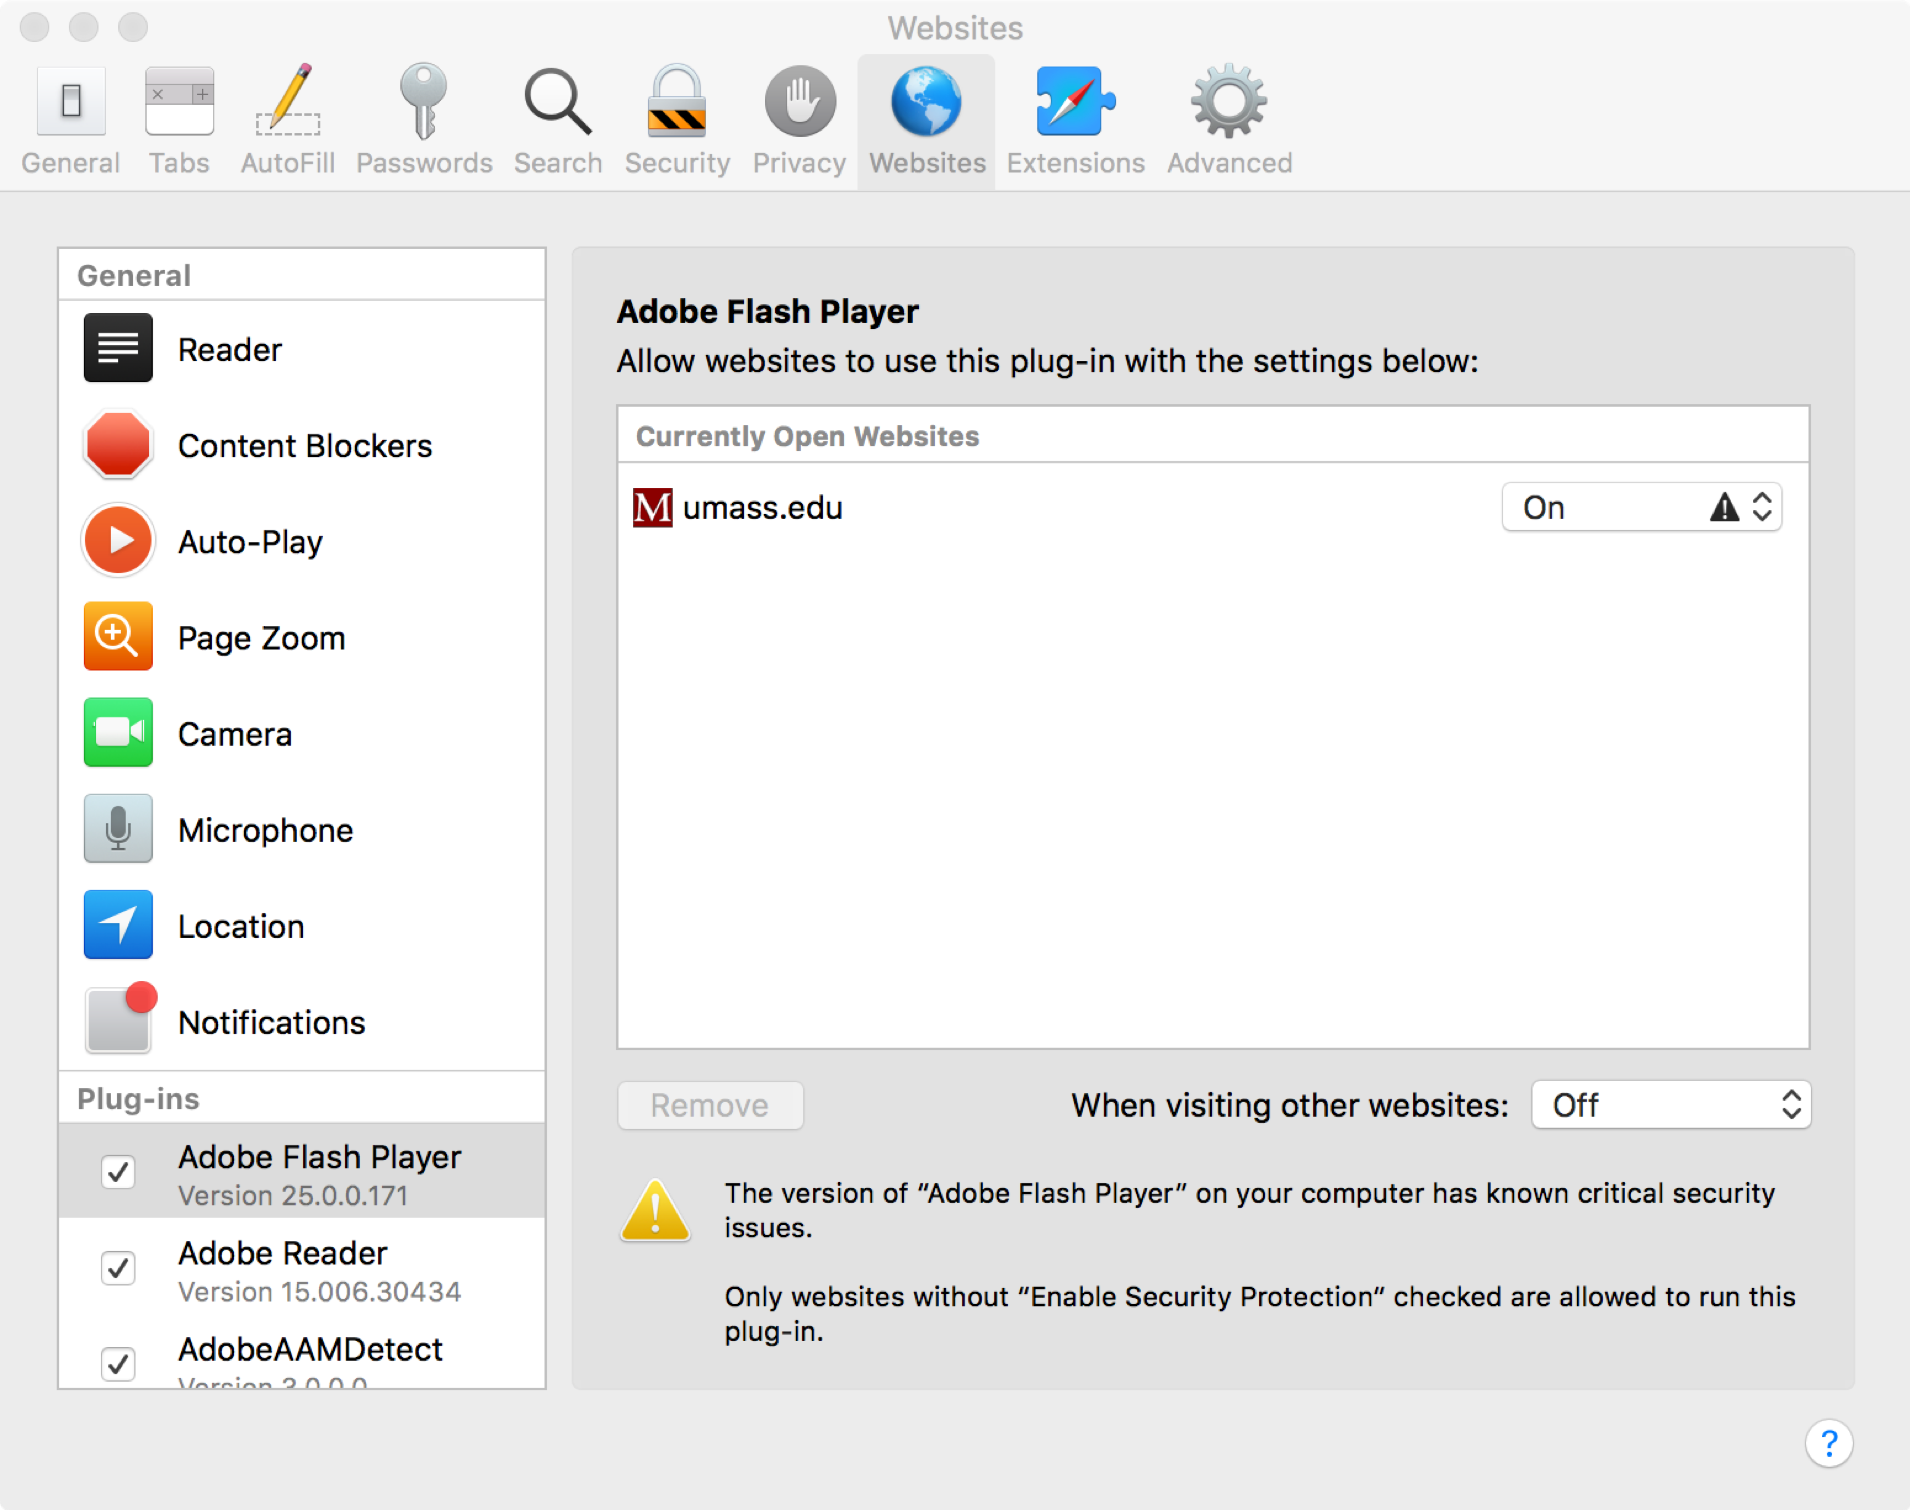 adobe flash player version 9 for mac